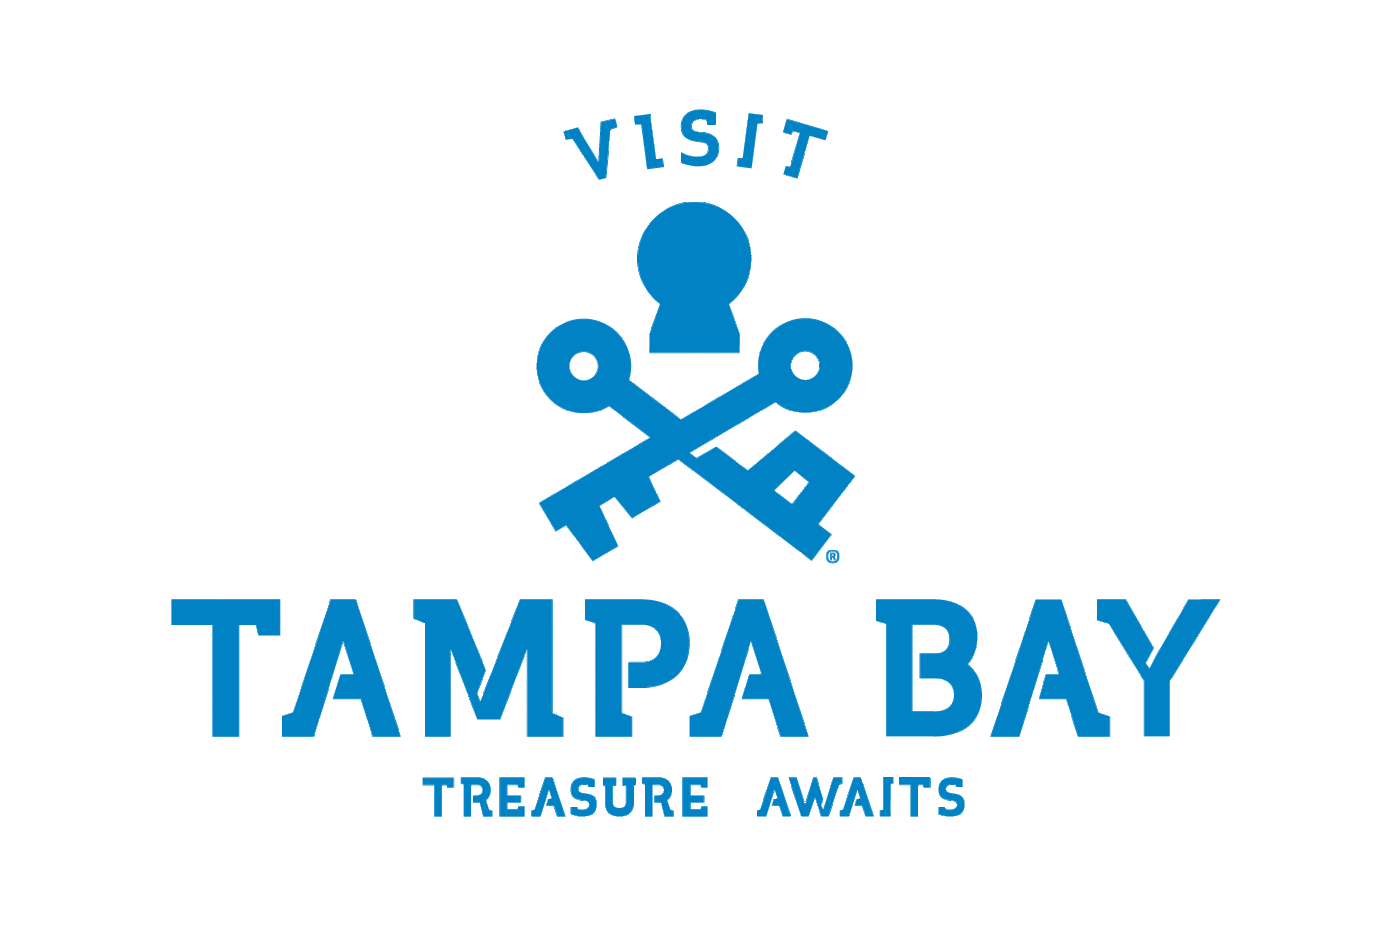 Visit Tampa Bay logo - Treasure Awaits vertical